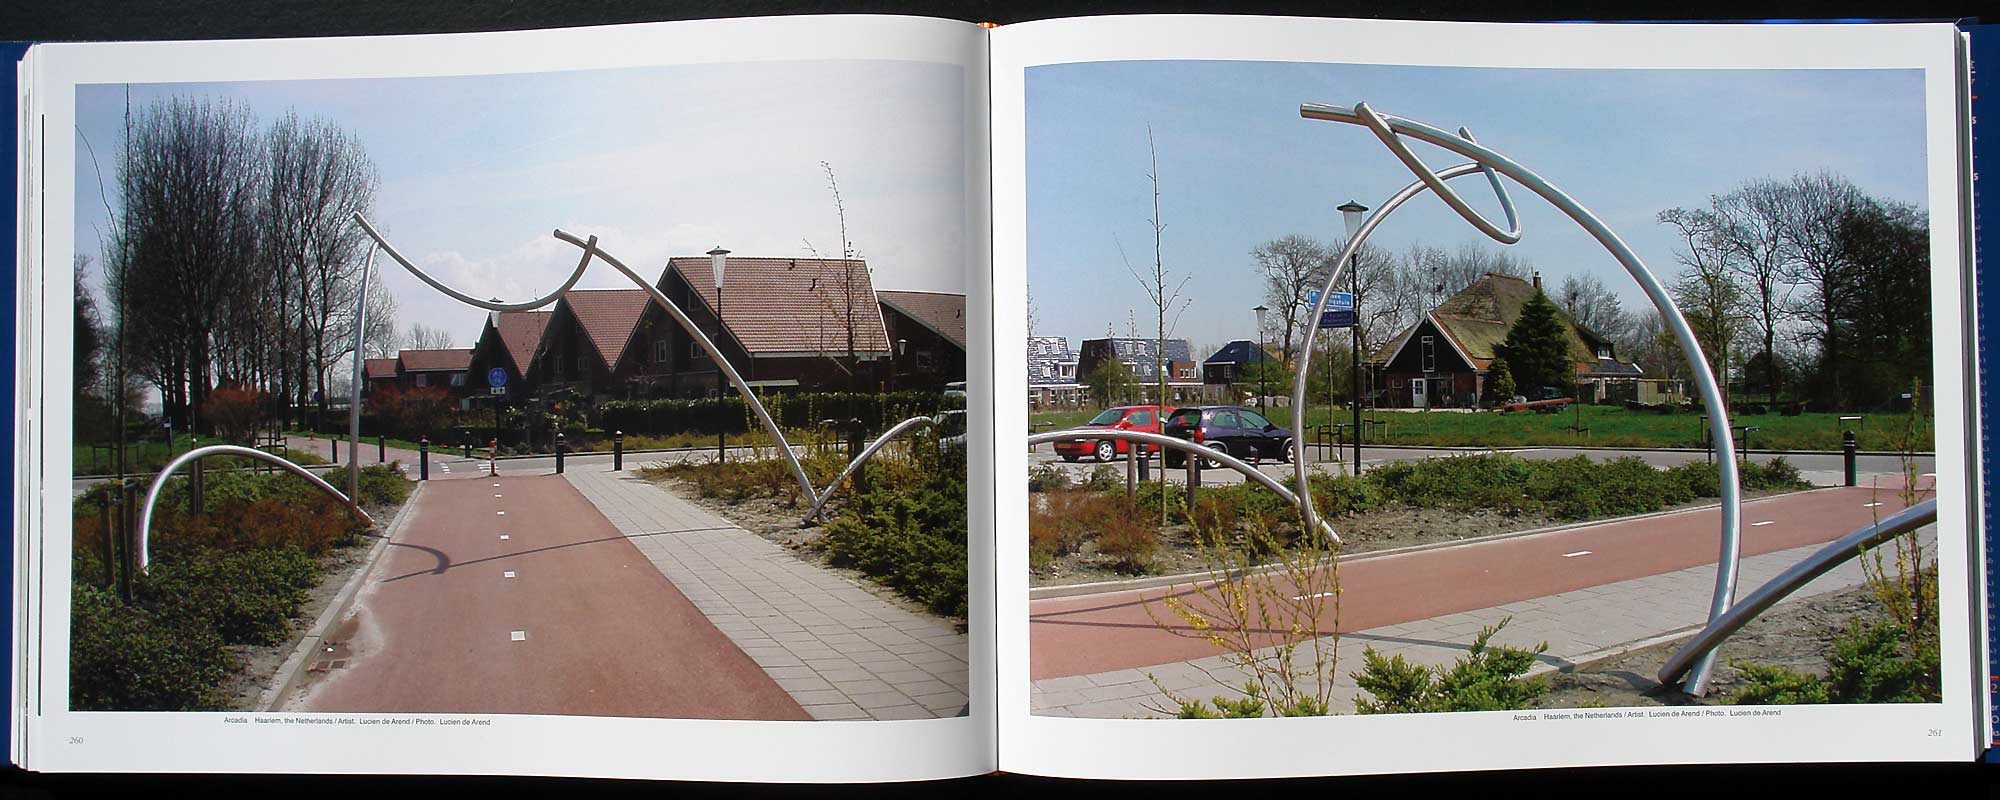 Public Art: A World's Eye View - Heerhugowaard public sculpture.